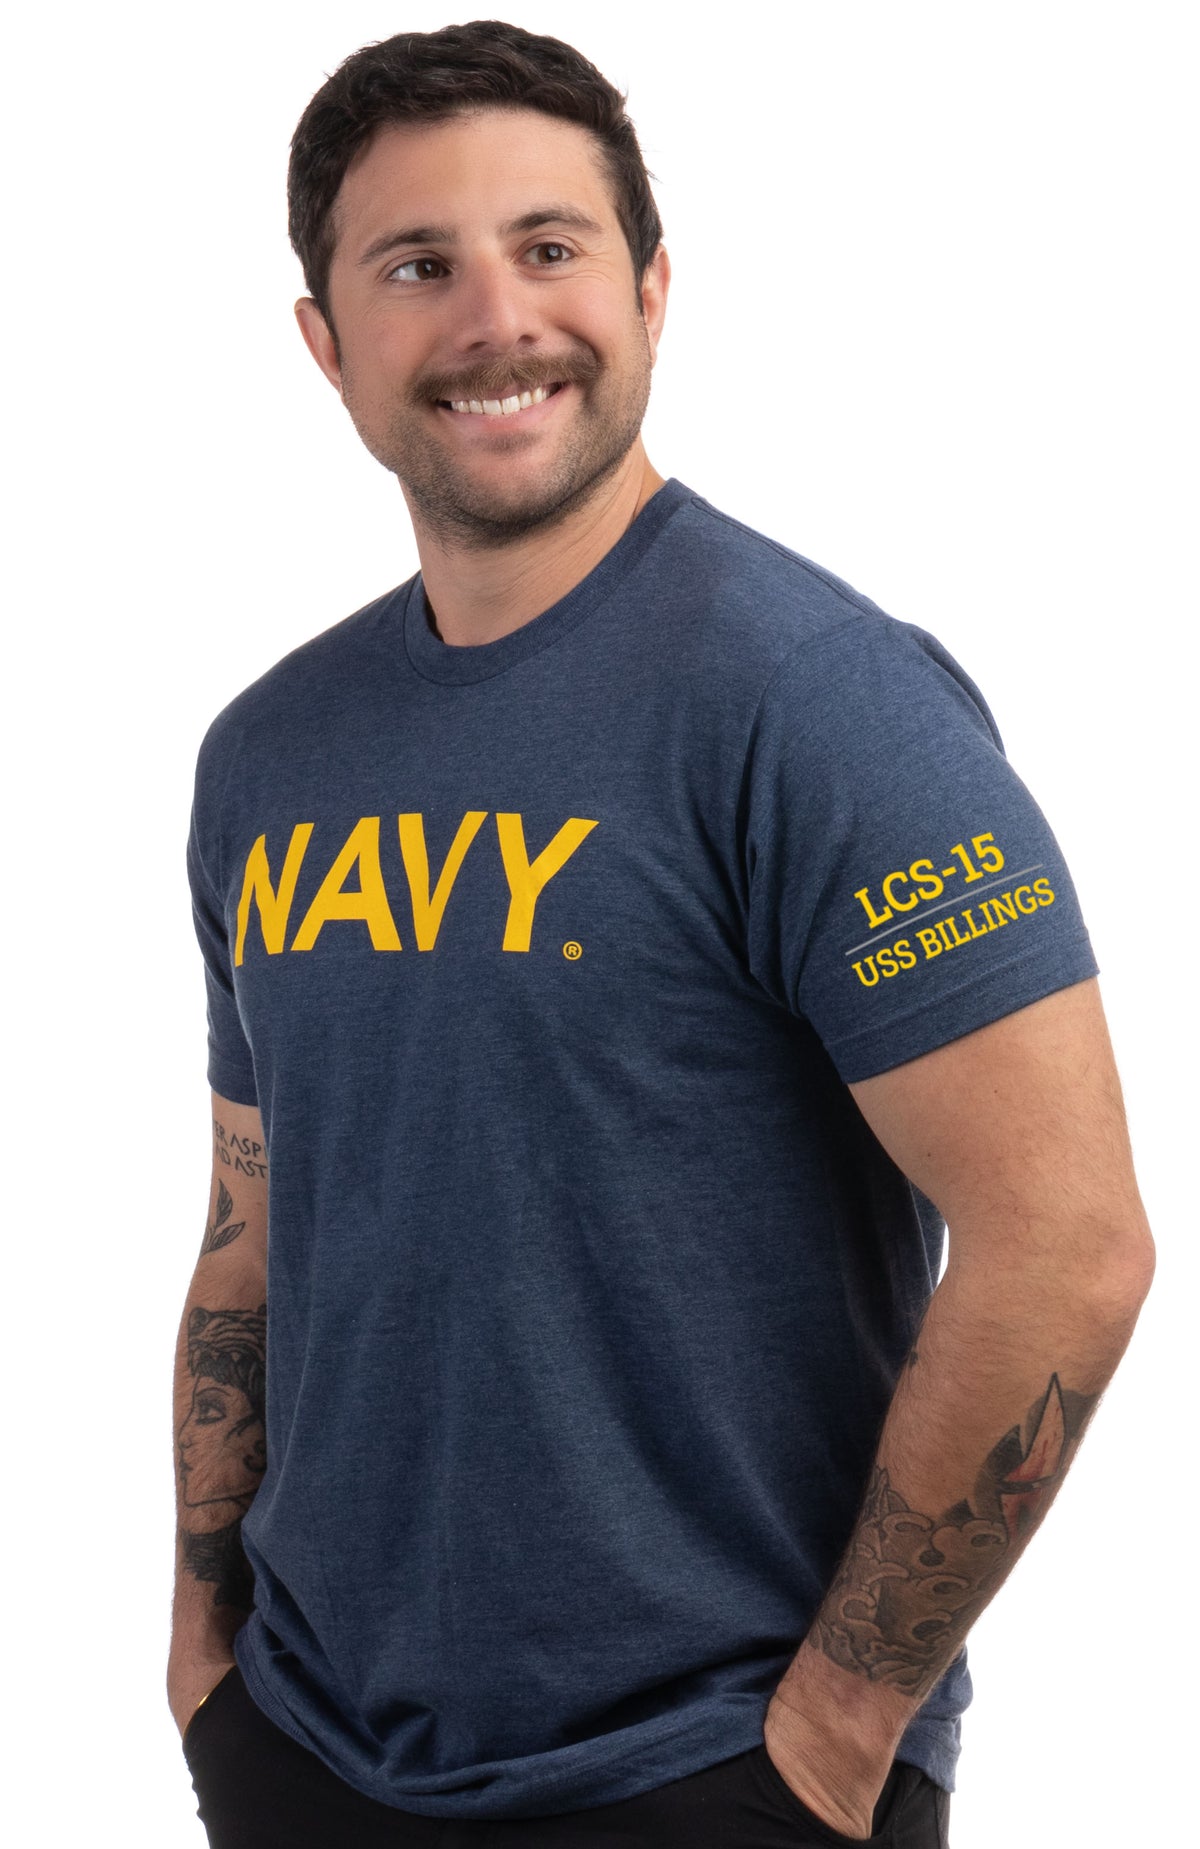 USS Billings, LCS-15 | U.S. Navy Sailor Veteran USN United States Naval T-shirt for Men Women